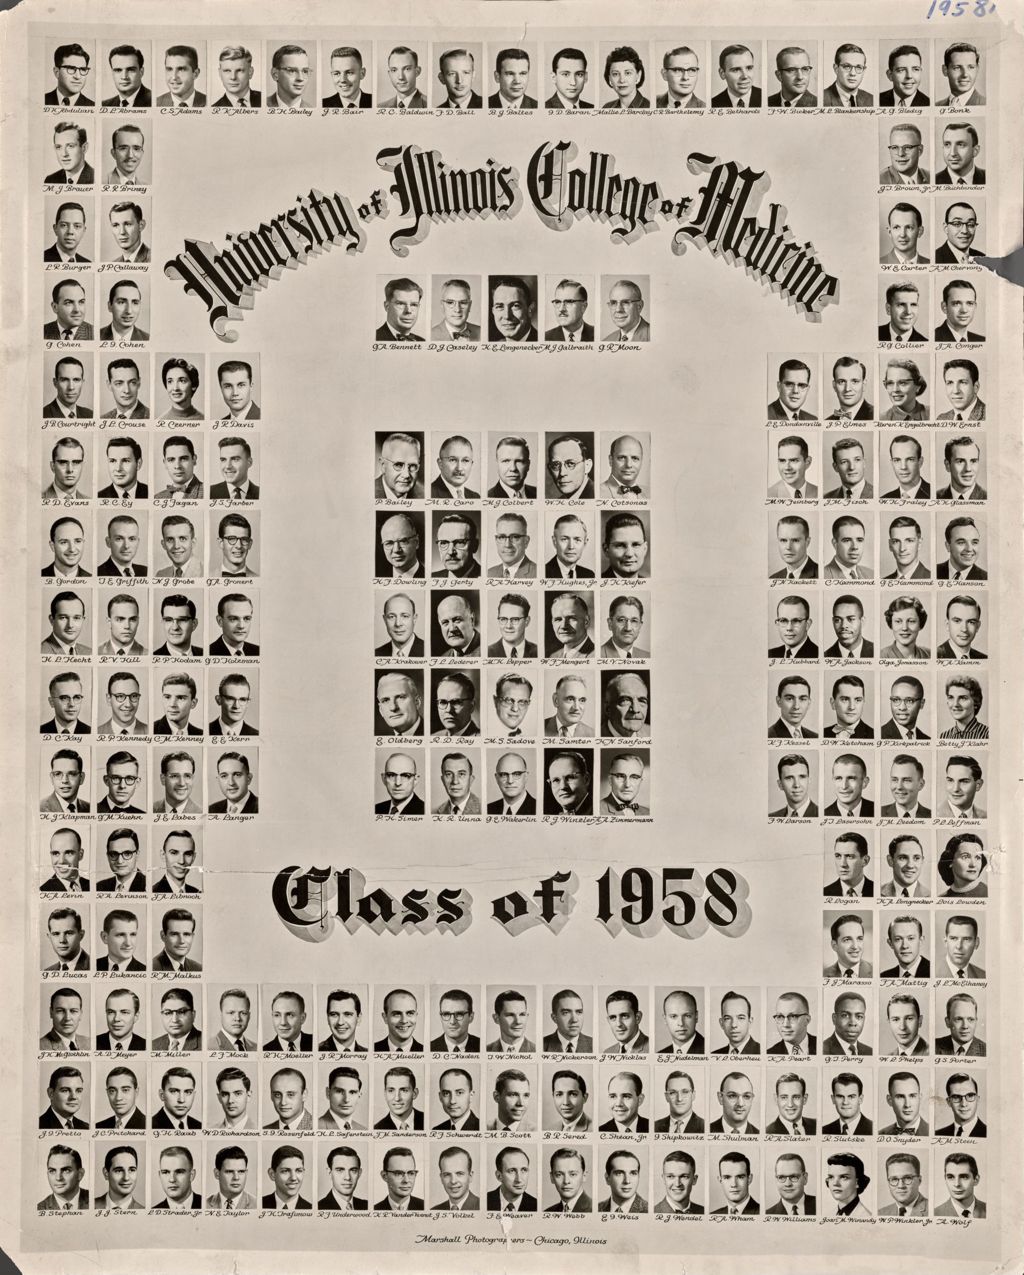 Miniature of 1958 graduating class, University of Illinois College of Medicine